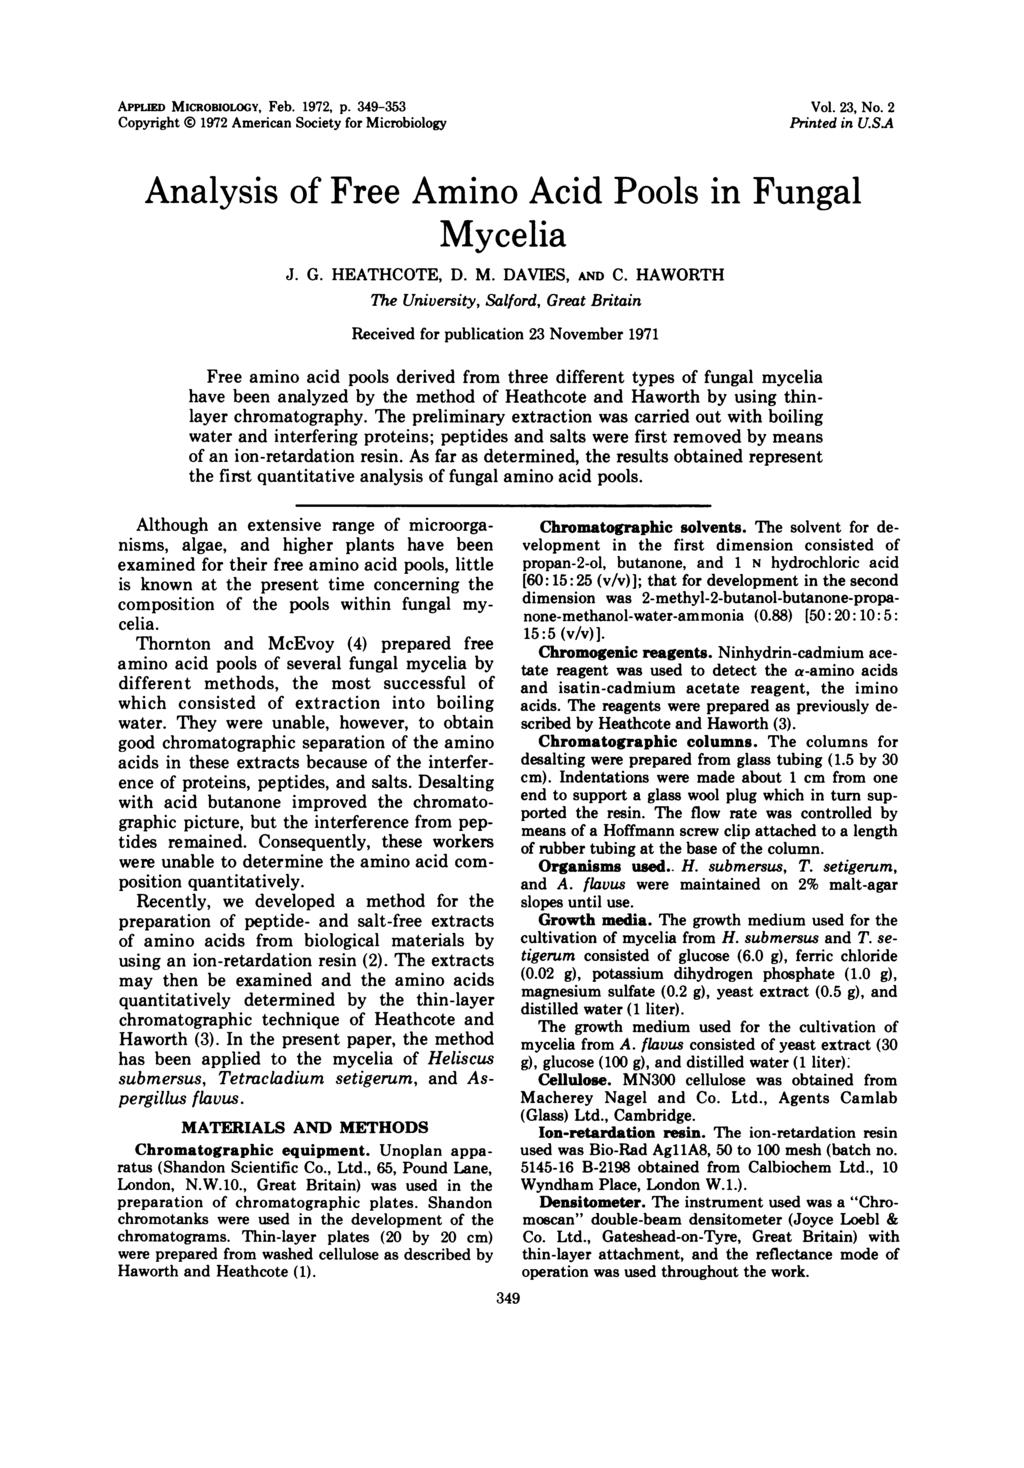 APPLID MICROBIOLOGY, Feb. 1972, p. 349-353 Copyright 1972 American Society for Microbiology Vol. 23, No. 2 Printed in U.SA Analysis of Free Amino Acid Pools in Fungal Mycelia J. G. HATHCOT, D. M. DAVIS, AND C.